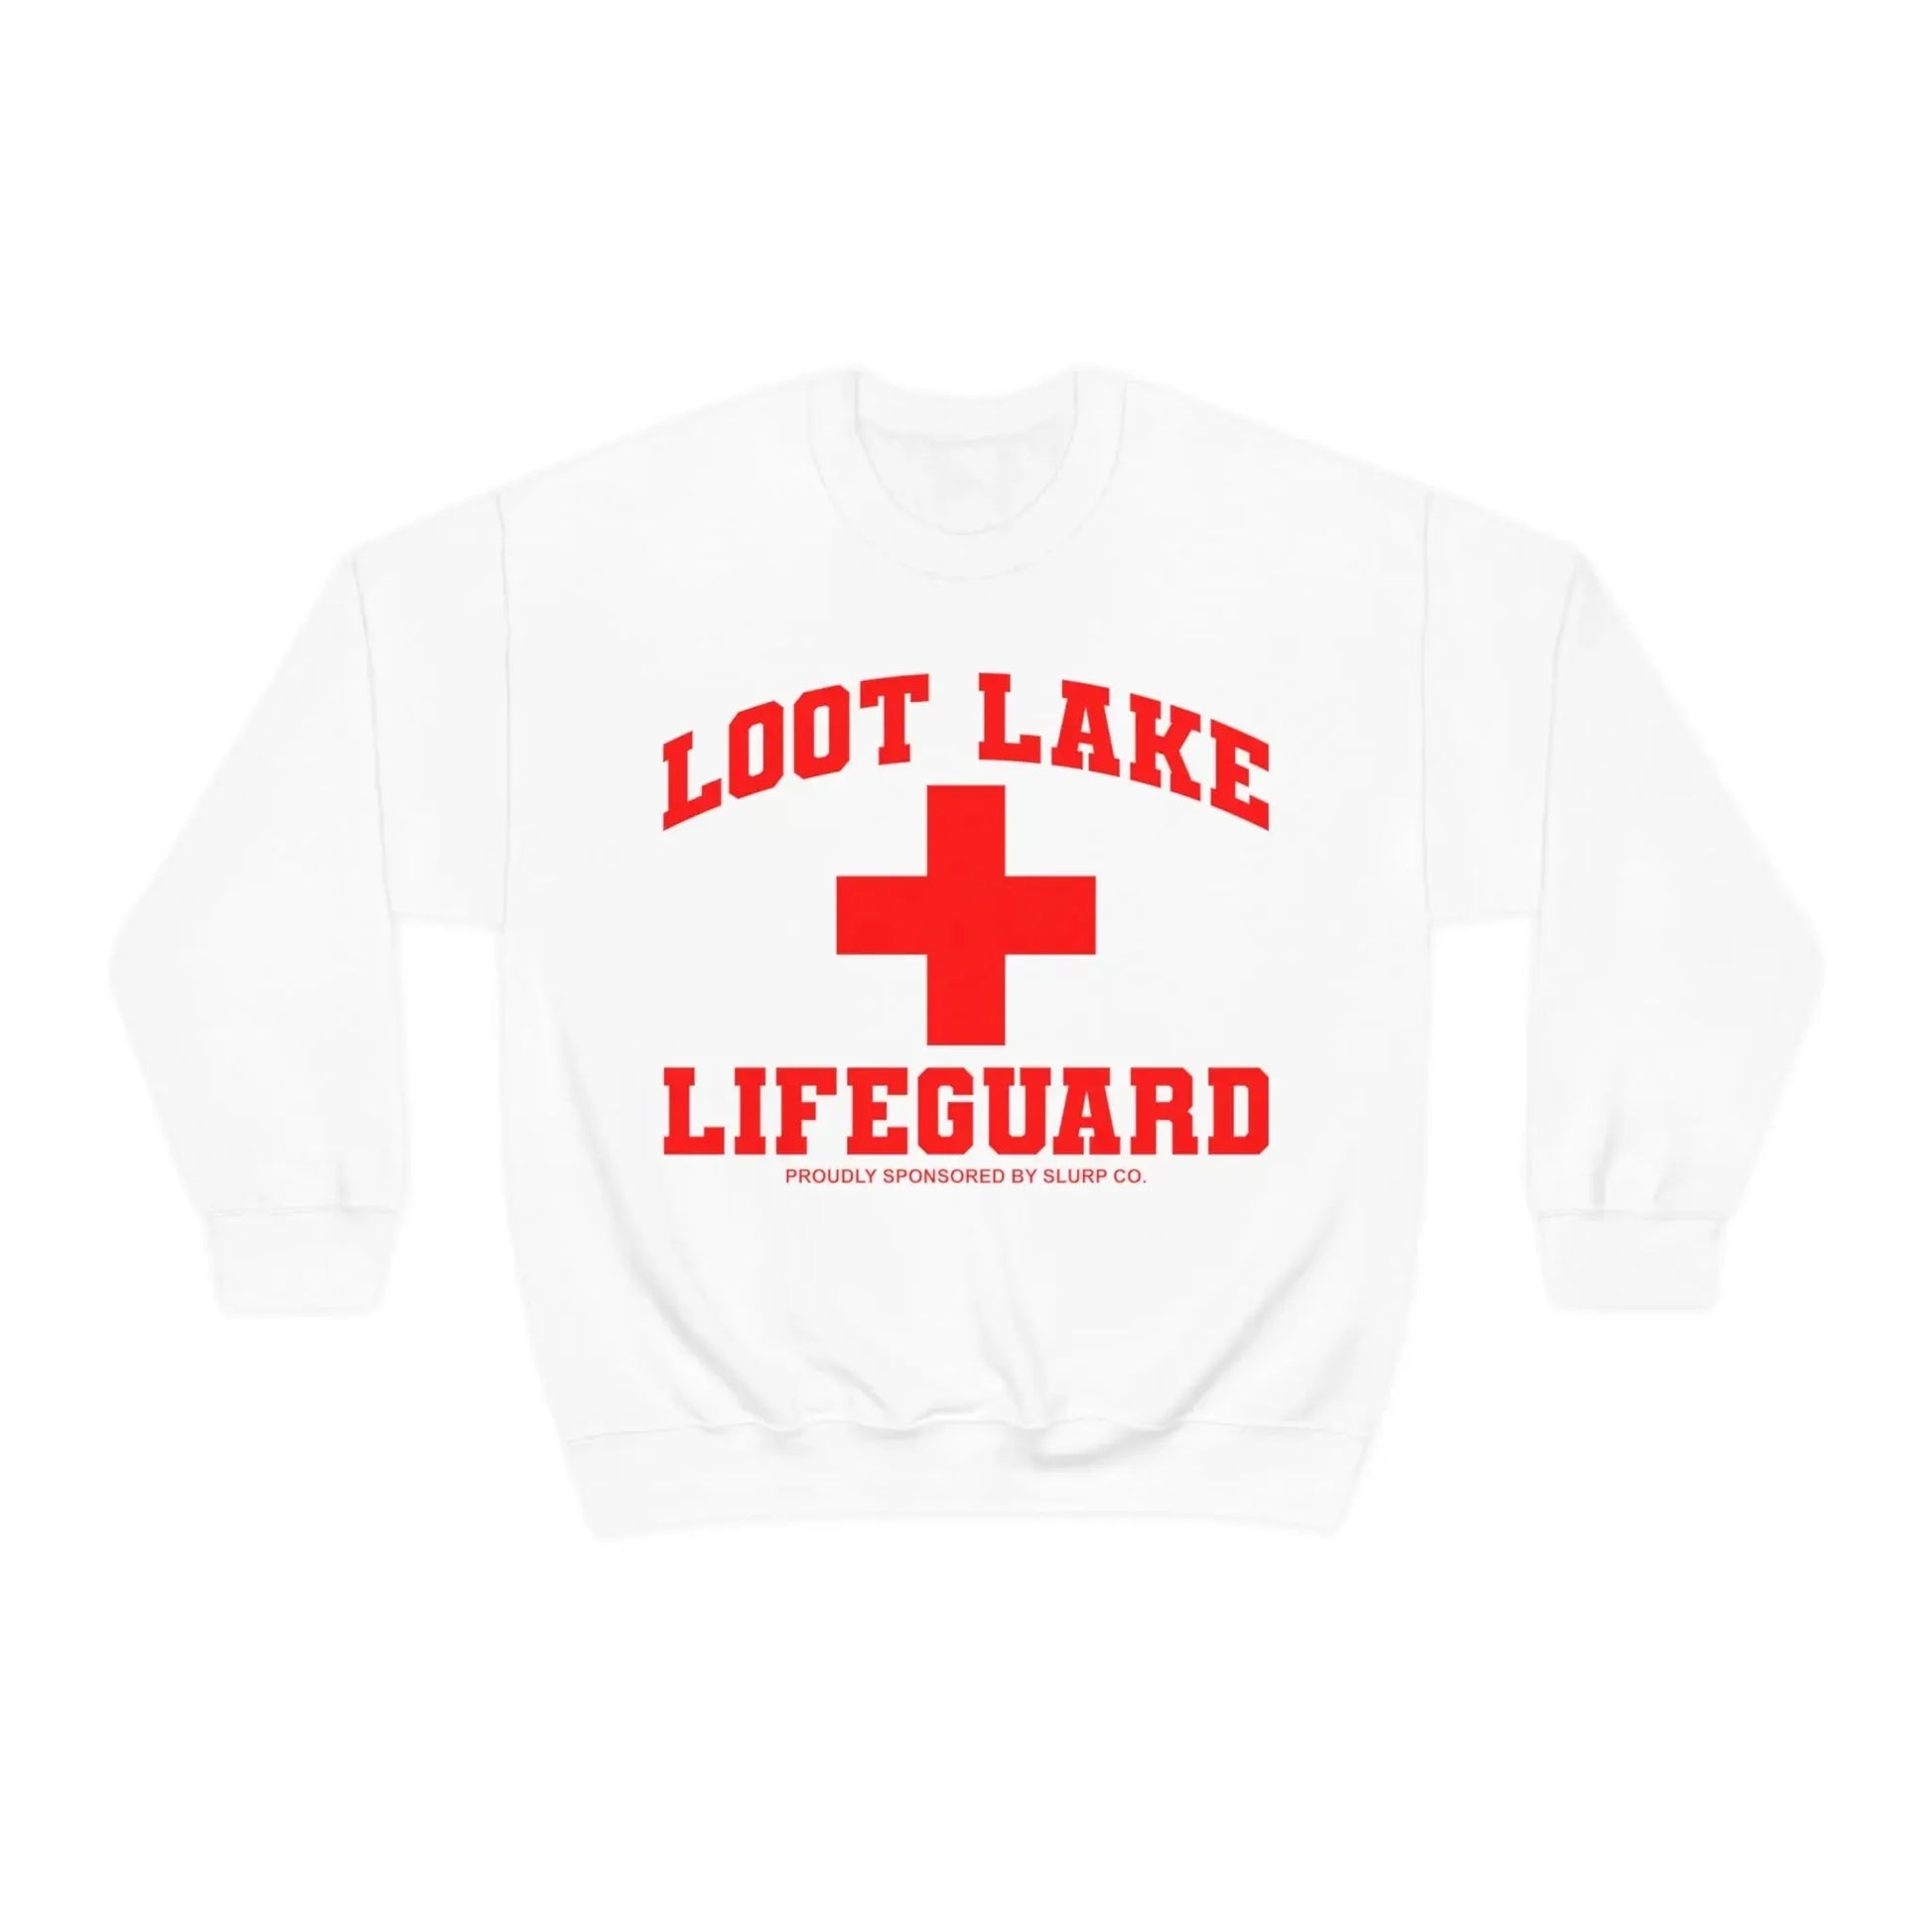 Loot Lake Lifeguard Sweatshirt - Failure International failureinternational.com store brand tiktok instagram